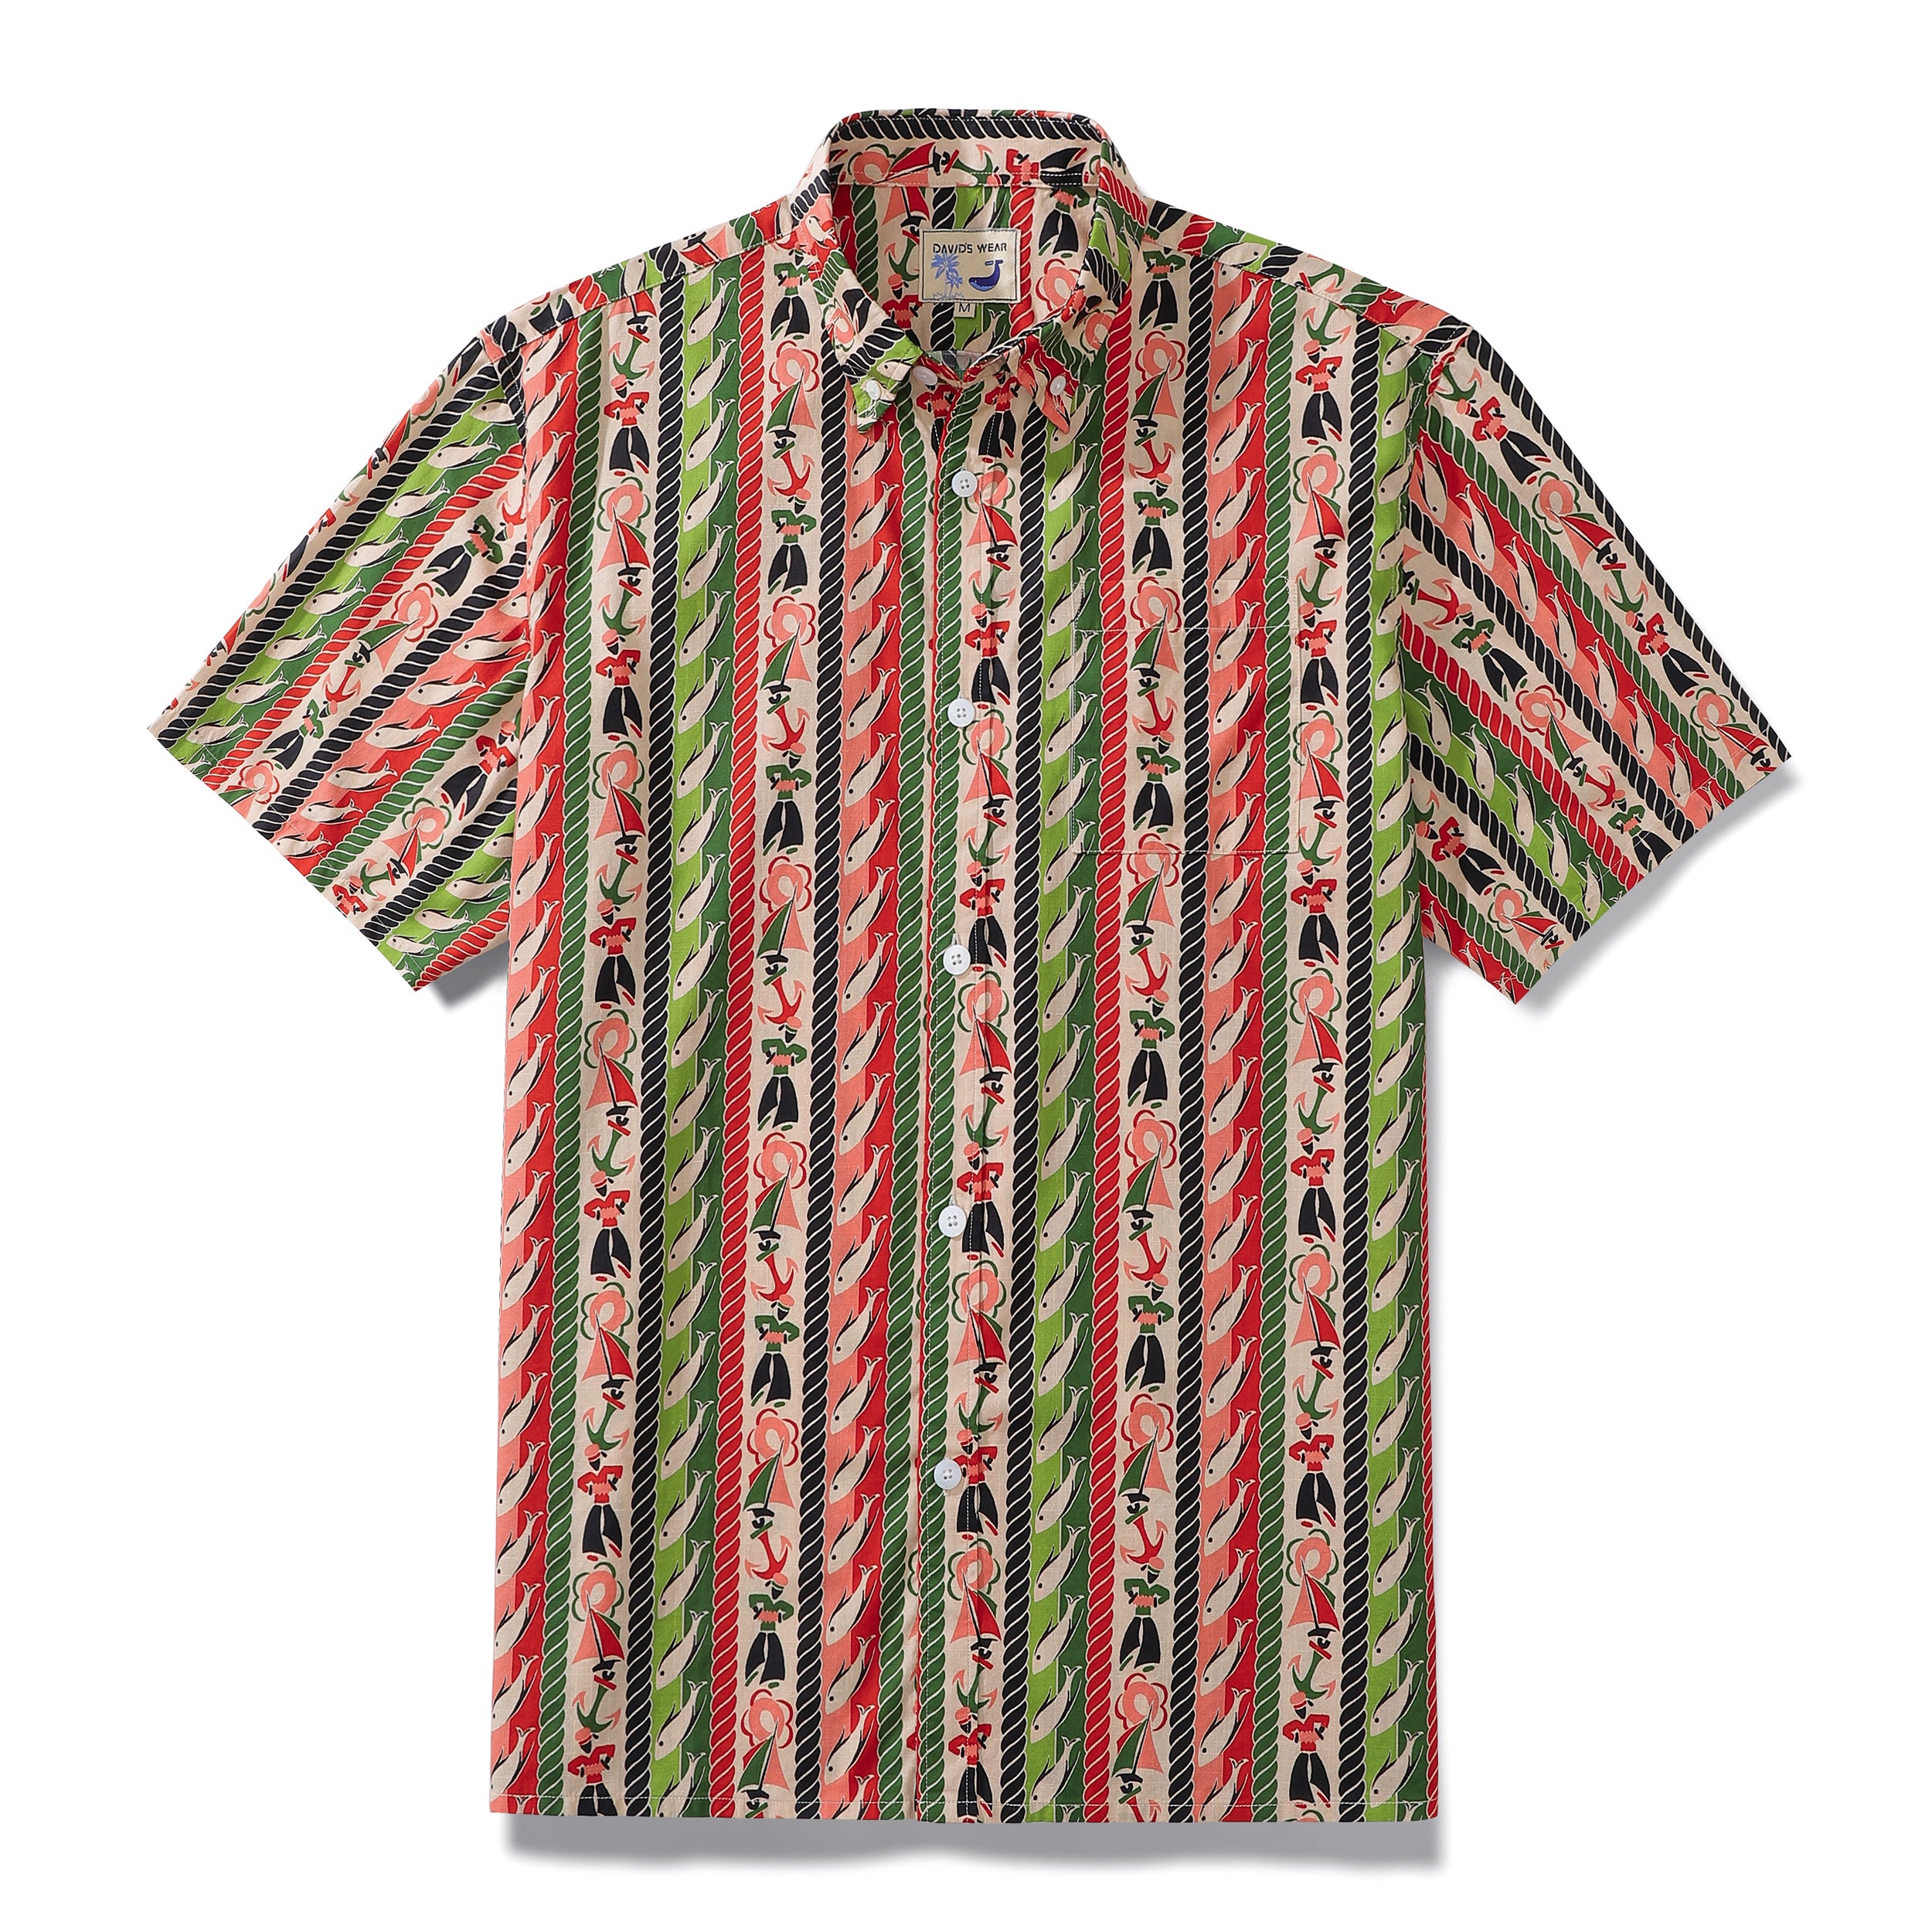 Hawaiian Shirt For Men Colorful Vertical Stripes Fish Mariner Tropical Cotton Shirt